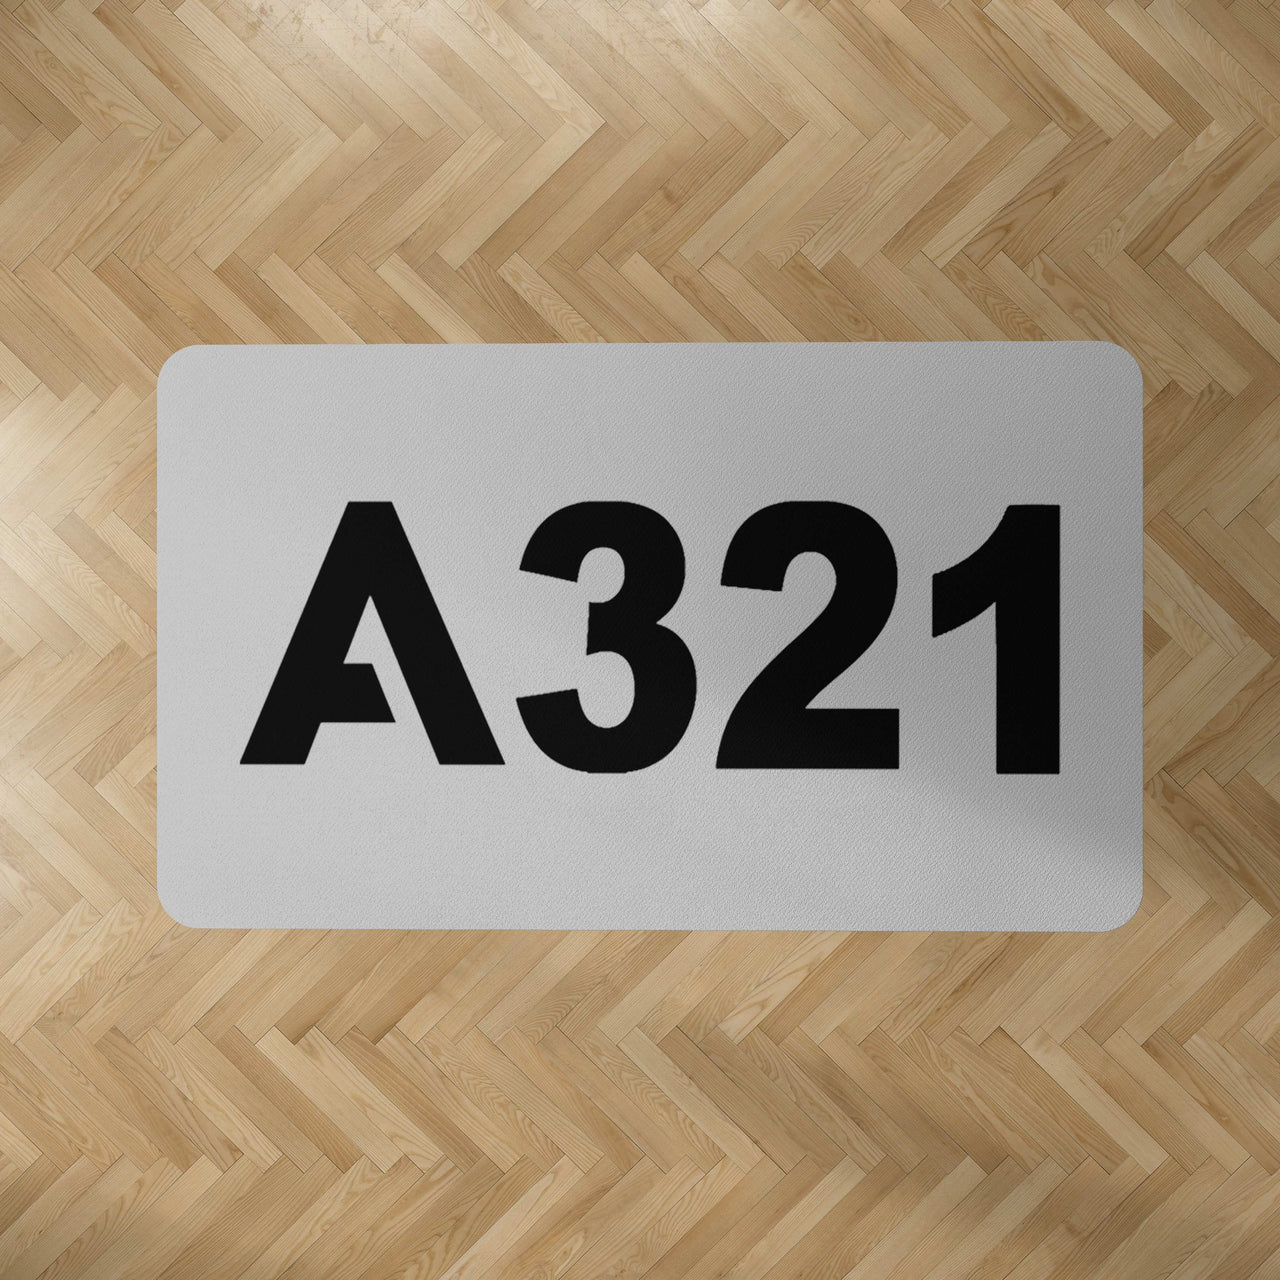 A321 Flat Text Designed Carpet & Floor Mats